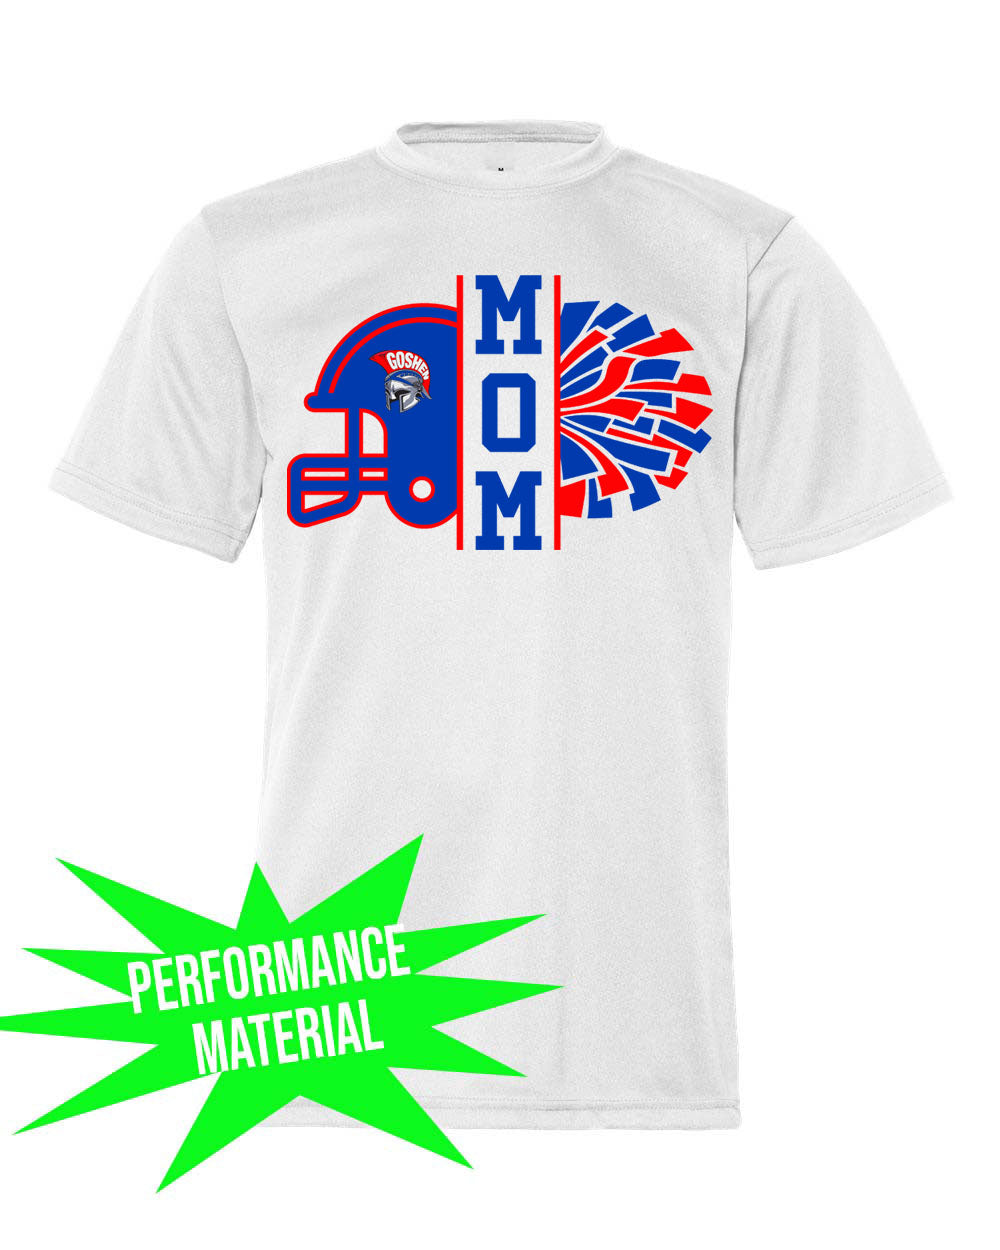 Goshen Cheer Performance Material design 7 T-Shirt